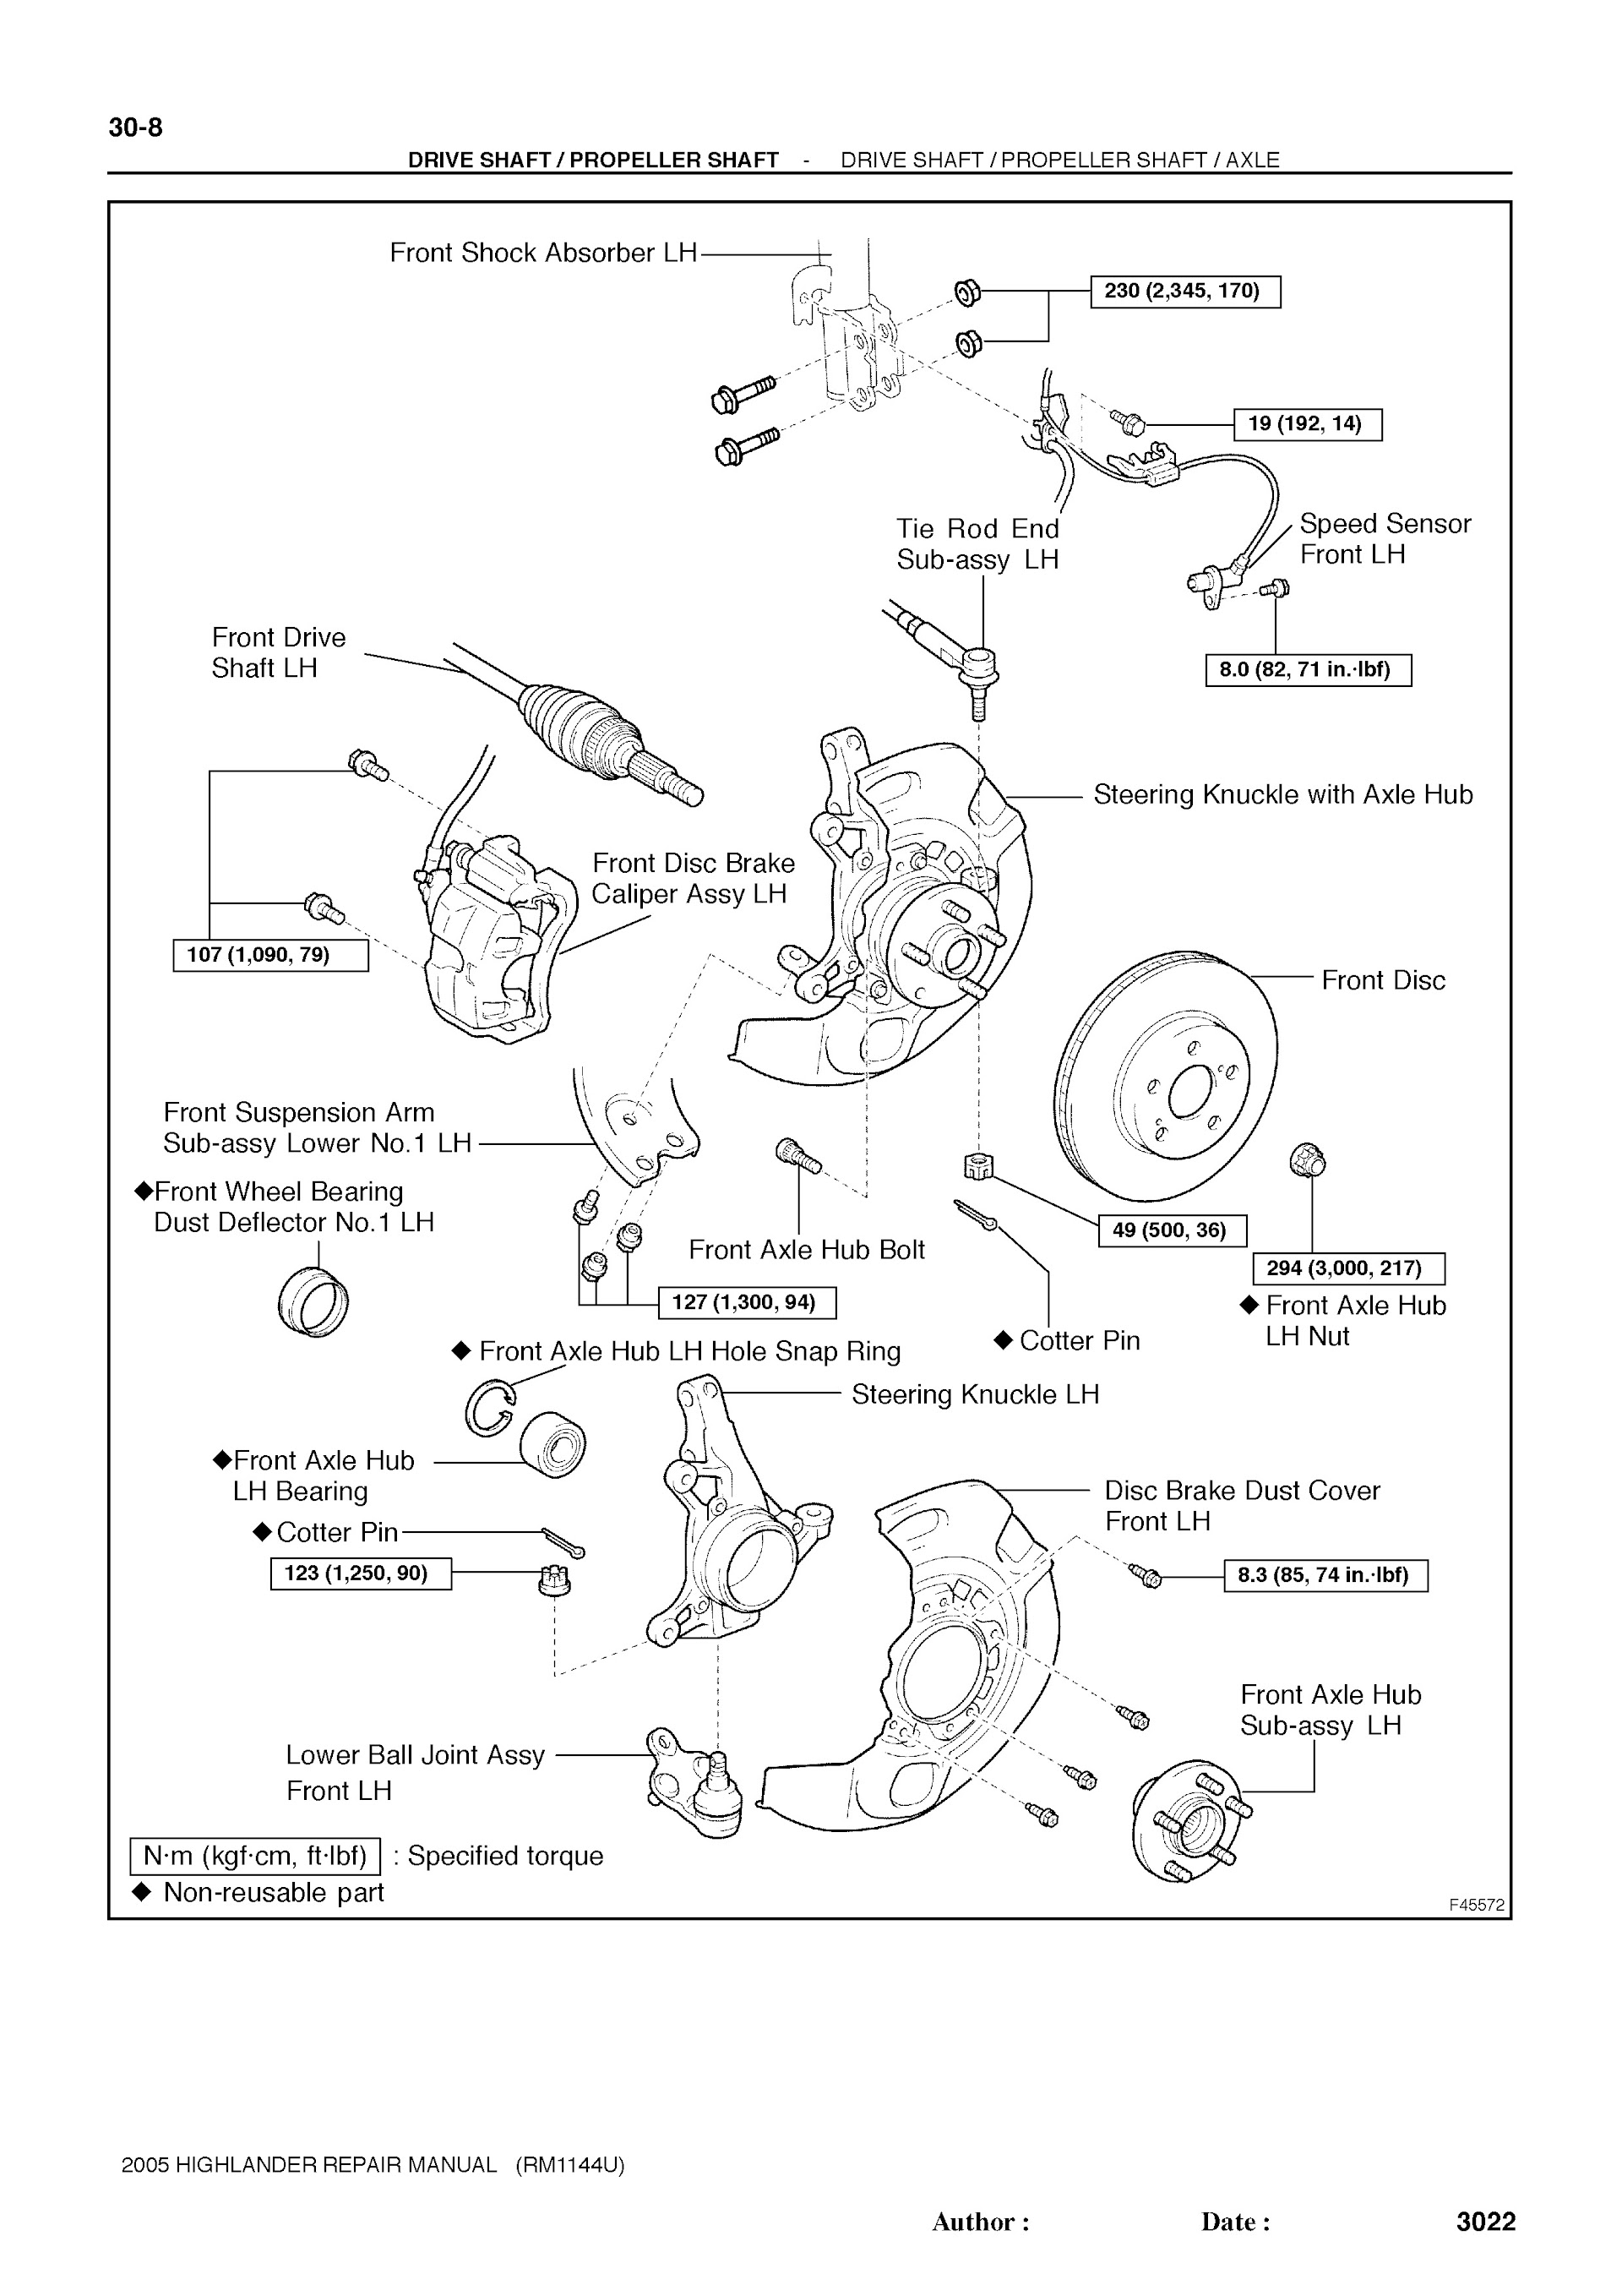 2001-2007 Toyota Highlander Repair Manual, Drive Shaft